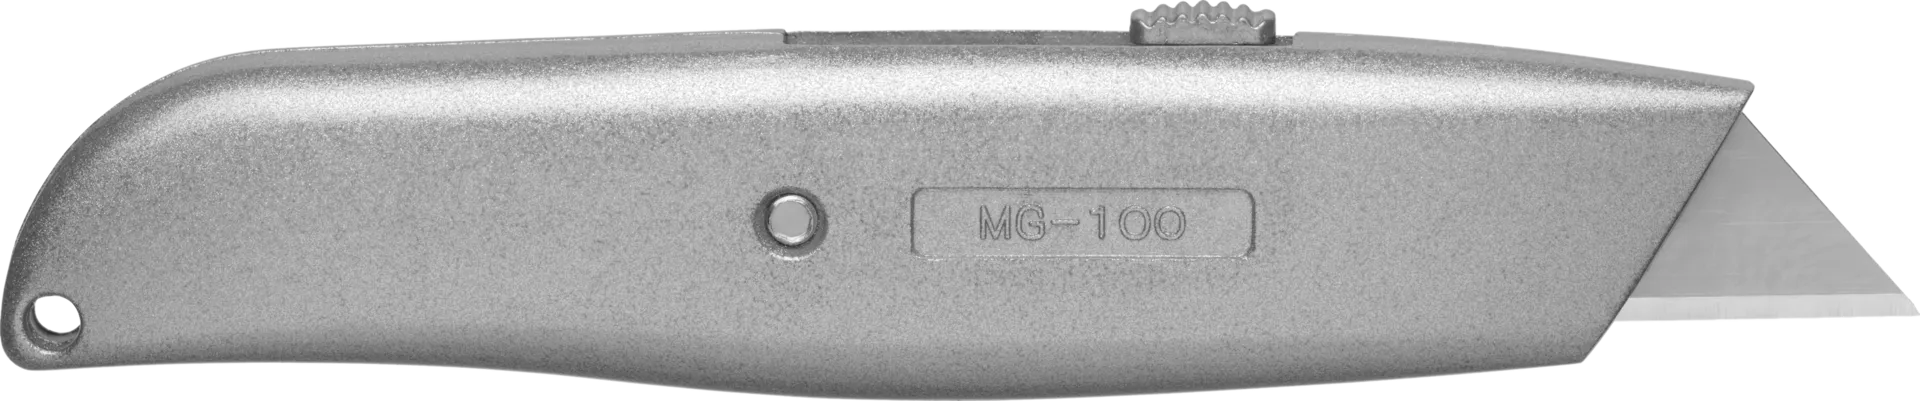 Mattoveitsi MG-100 - 2